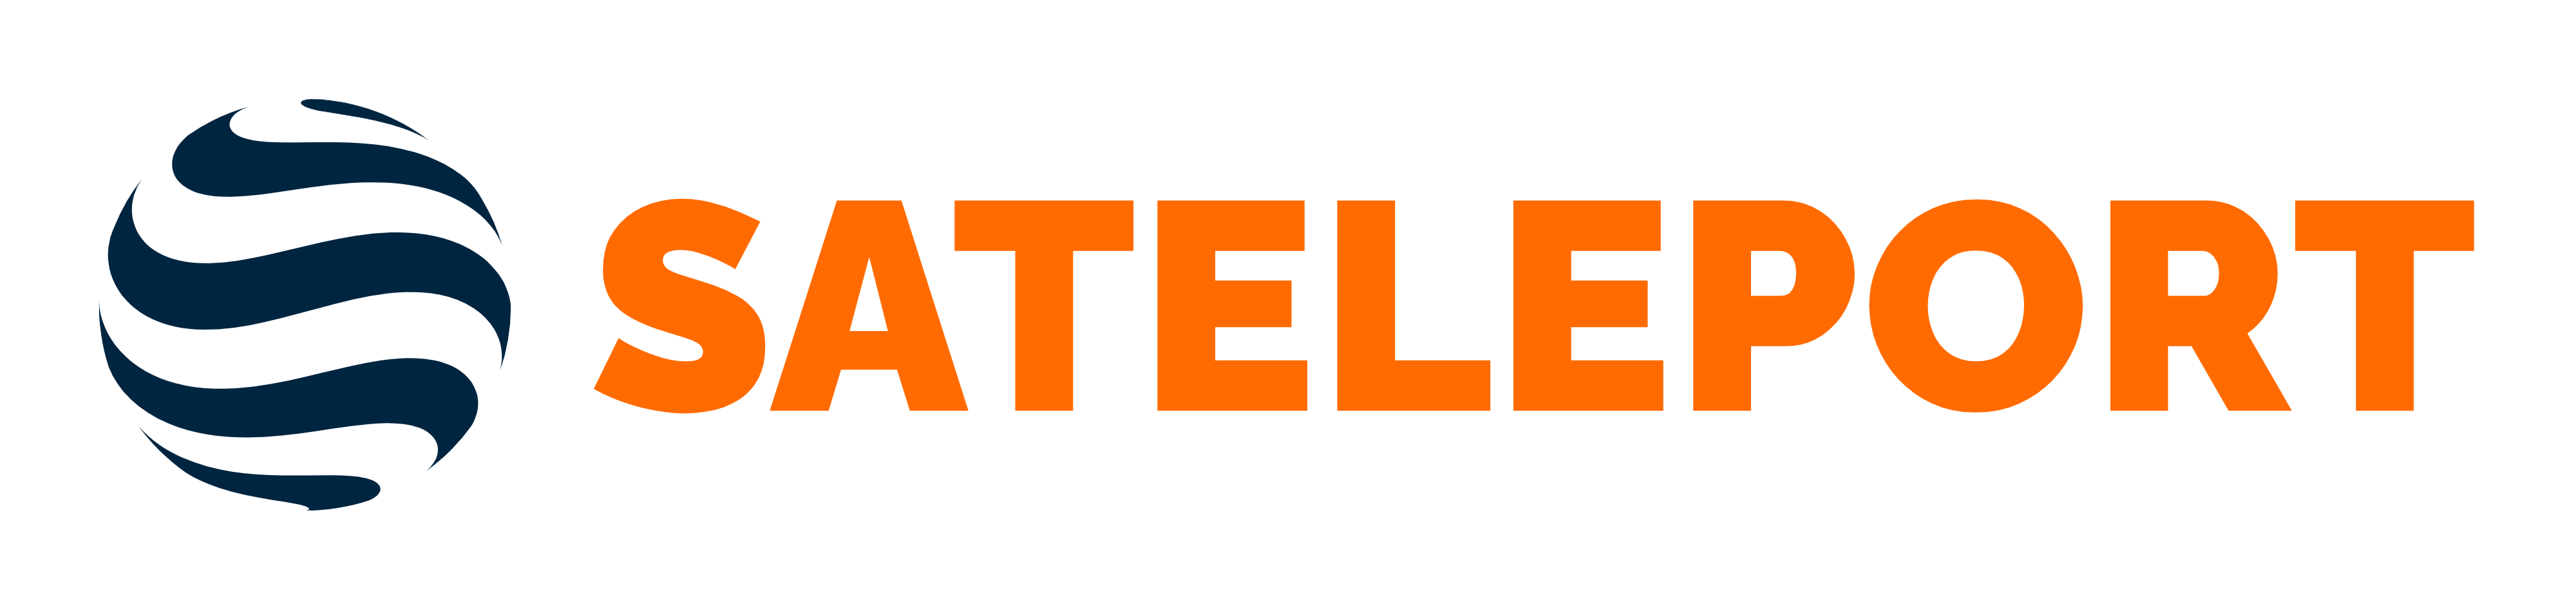 Sateleport: Satellite Broadcasting Solutions